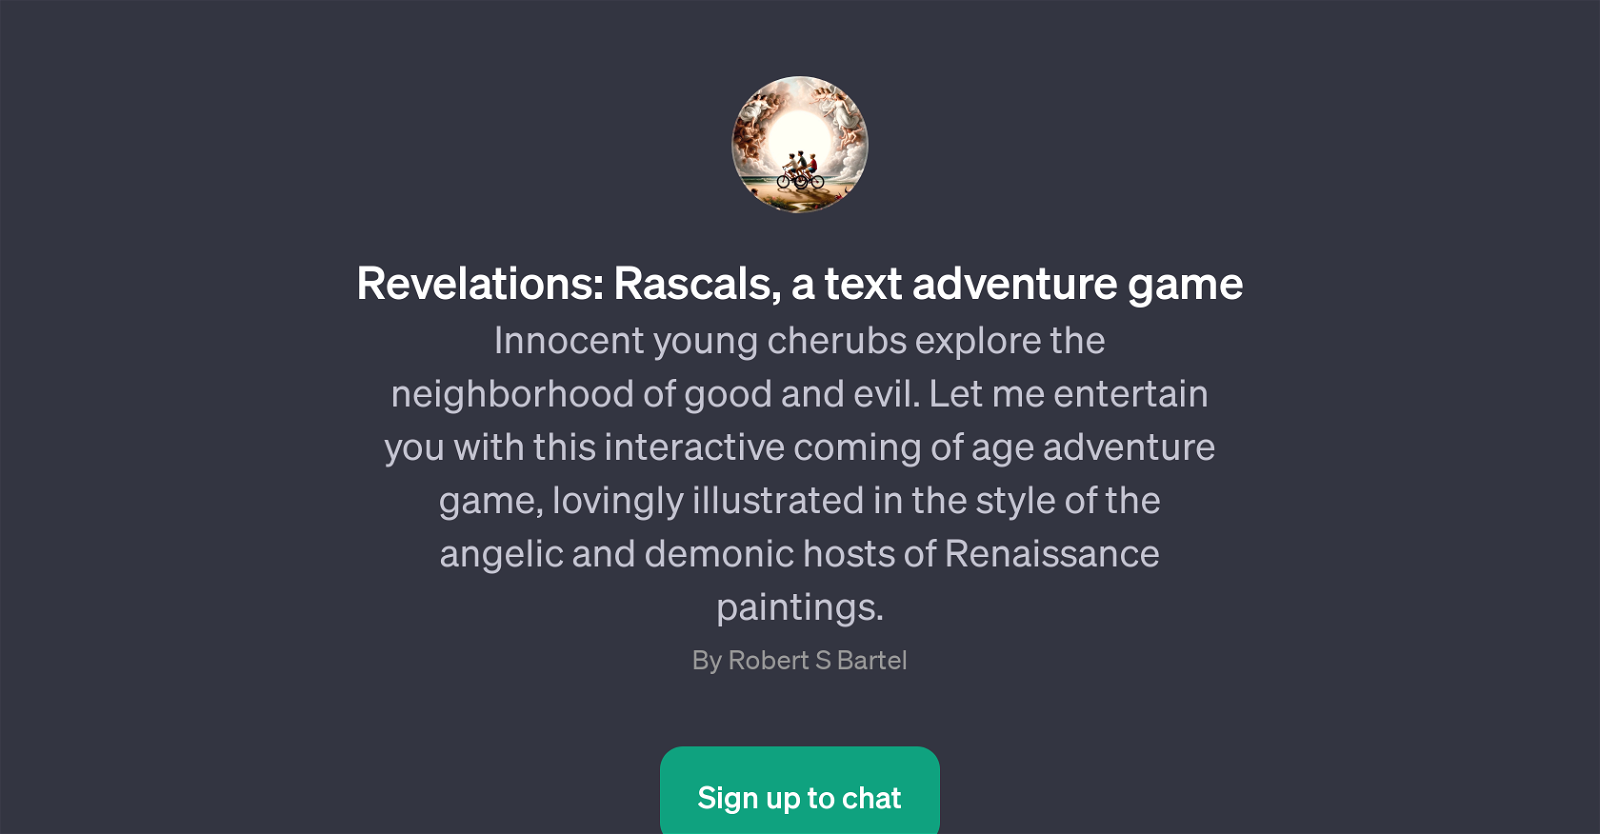 Revelations: Rascals website